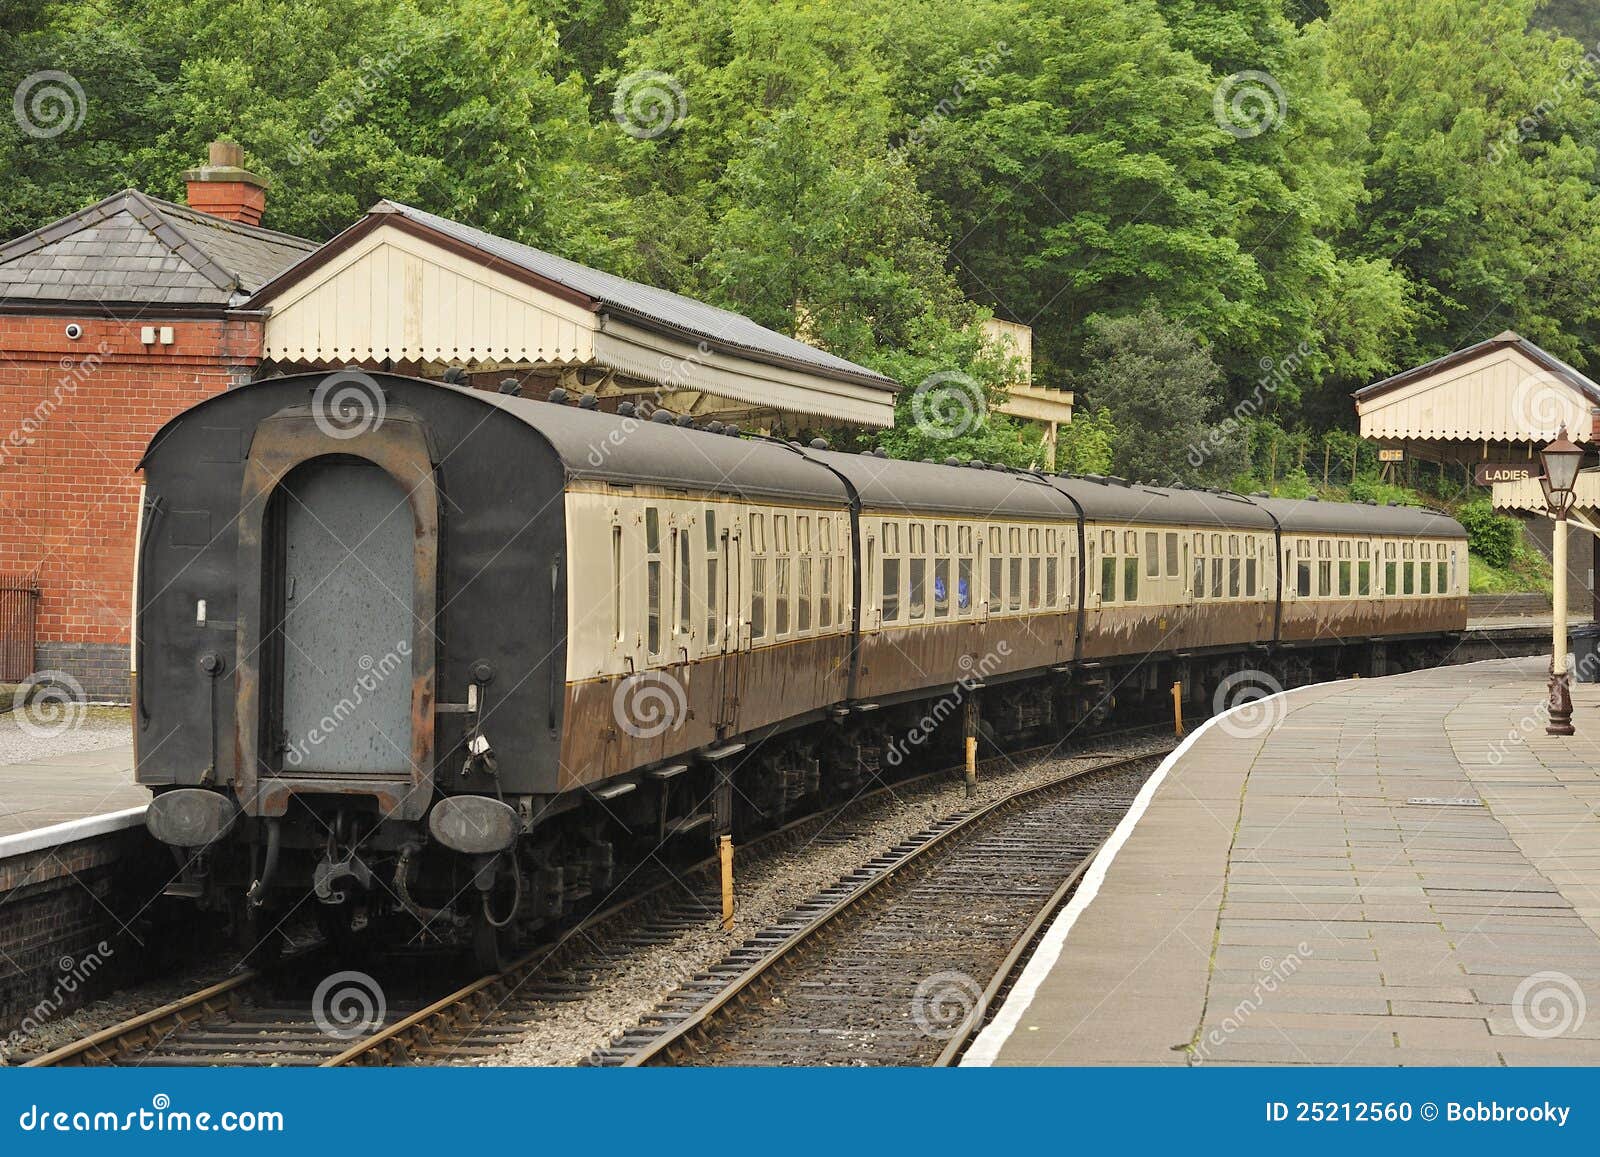 heritage rail carriages, llangollen